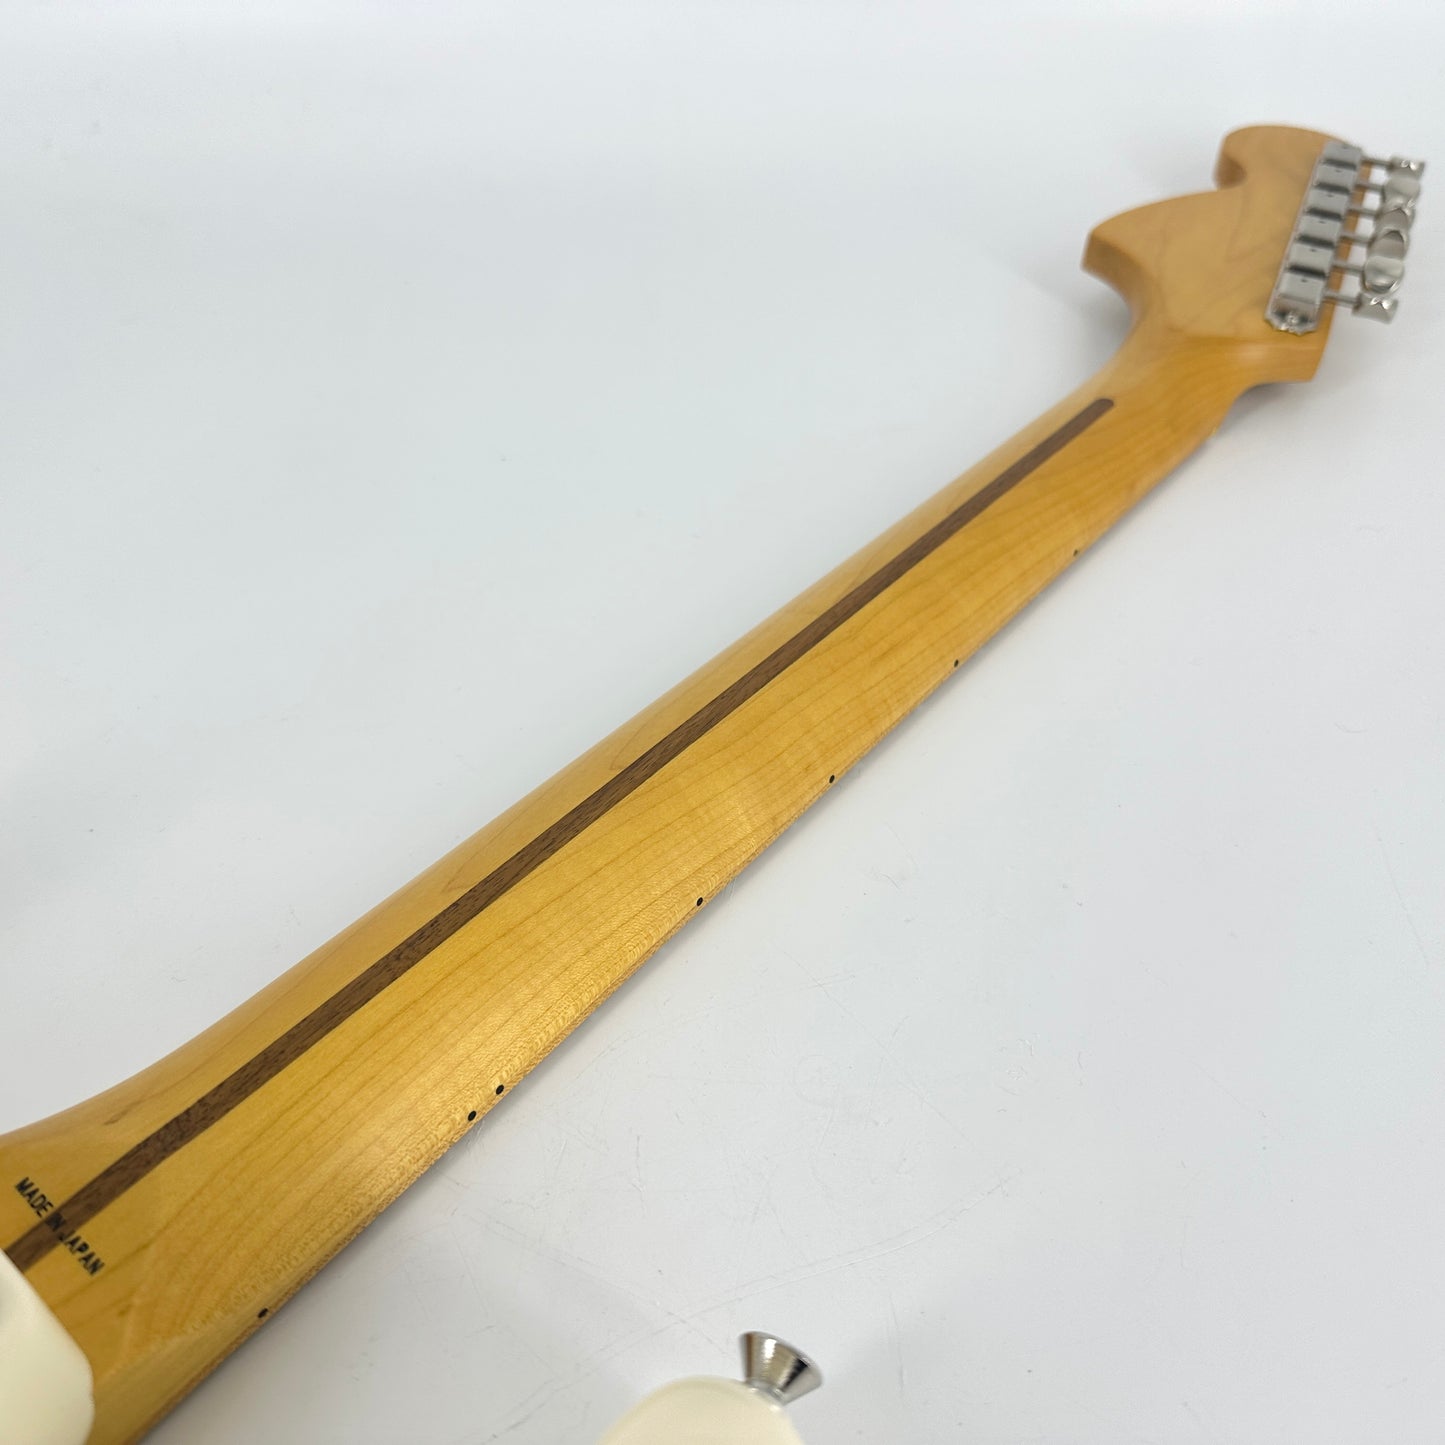 2022 Fender JV Modified Vintage 60's Japan Stratocaster – Olympic White